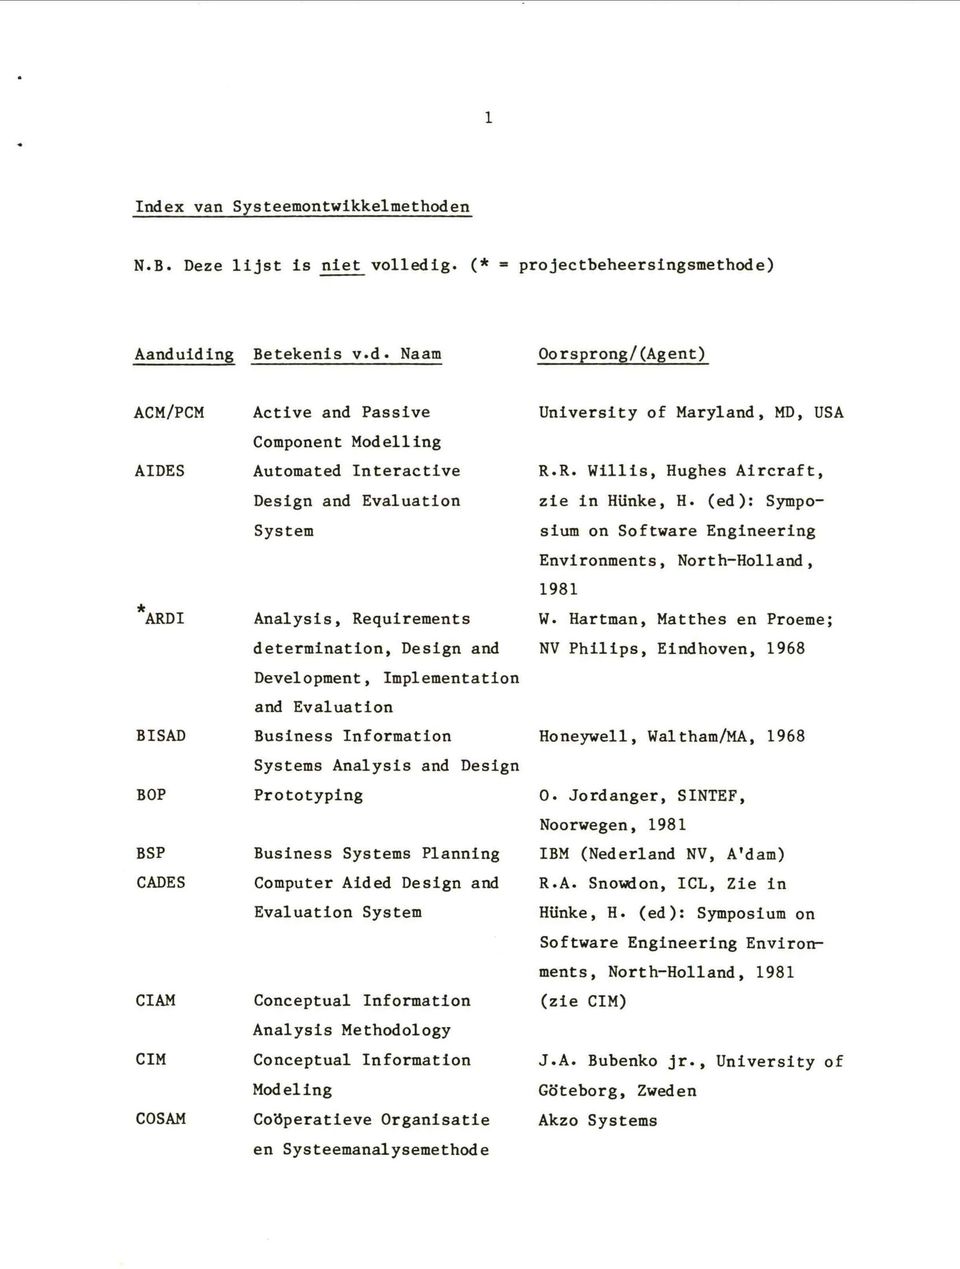 Hartman, Matthes en Proeme; determination, Design and NV Philips, Eindhoven, 1968 Development, Implementation and Evaluation BISAD Business Information Honeywell, Waltham~MA, 1968 Systems Analysis